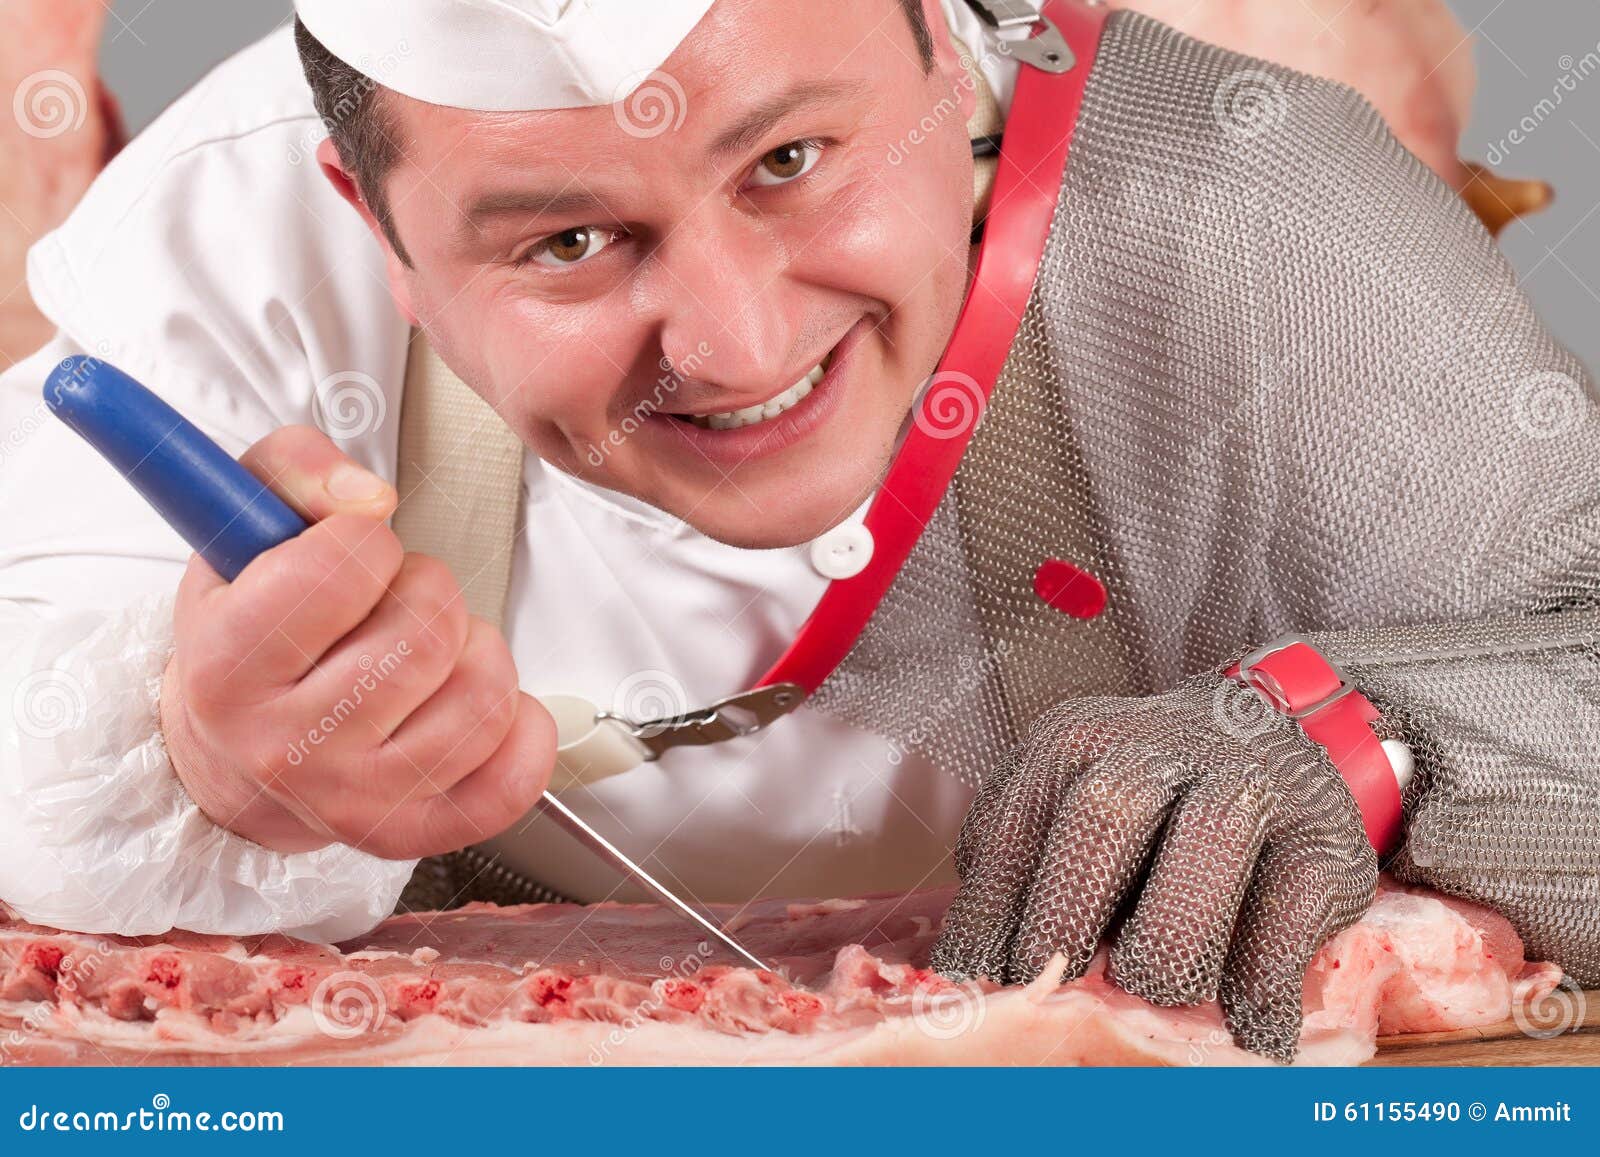 butcher jobs